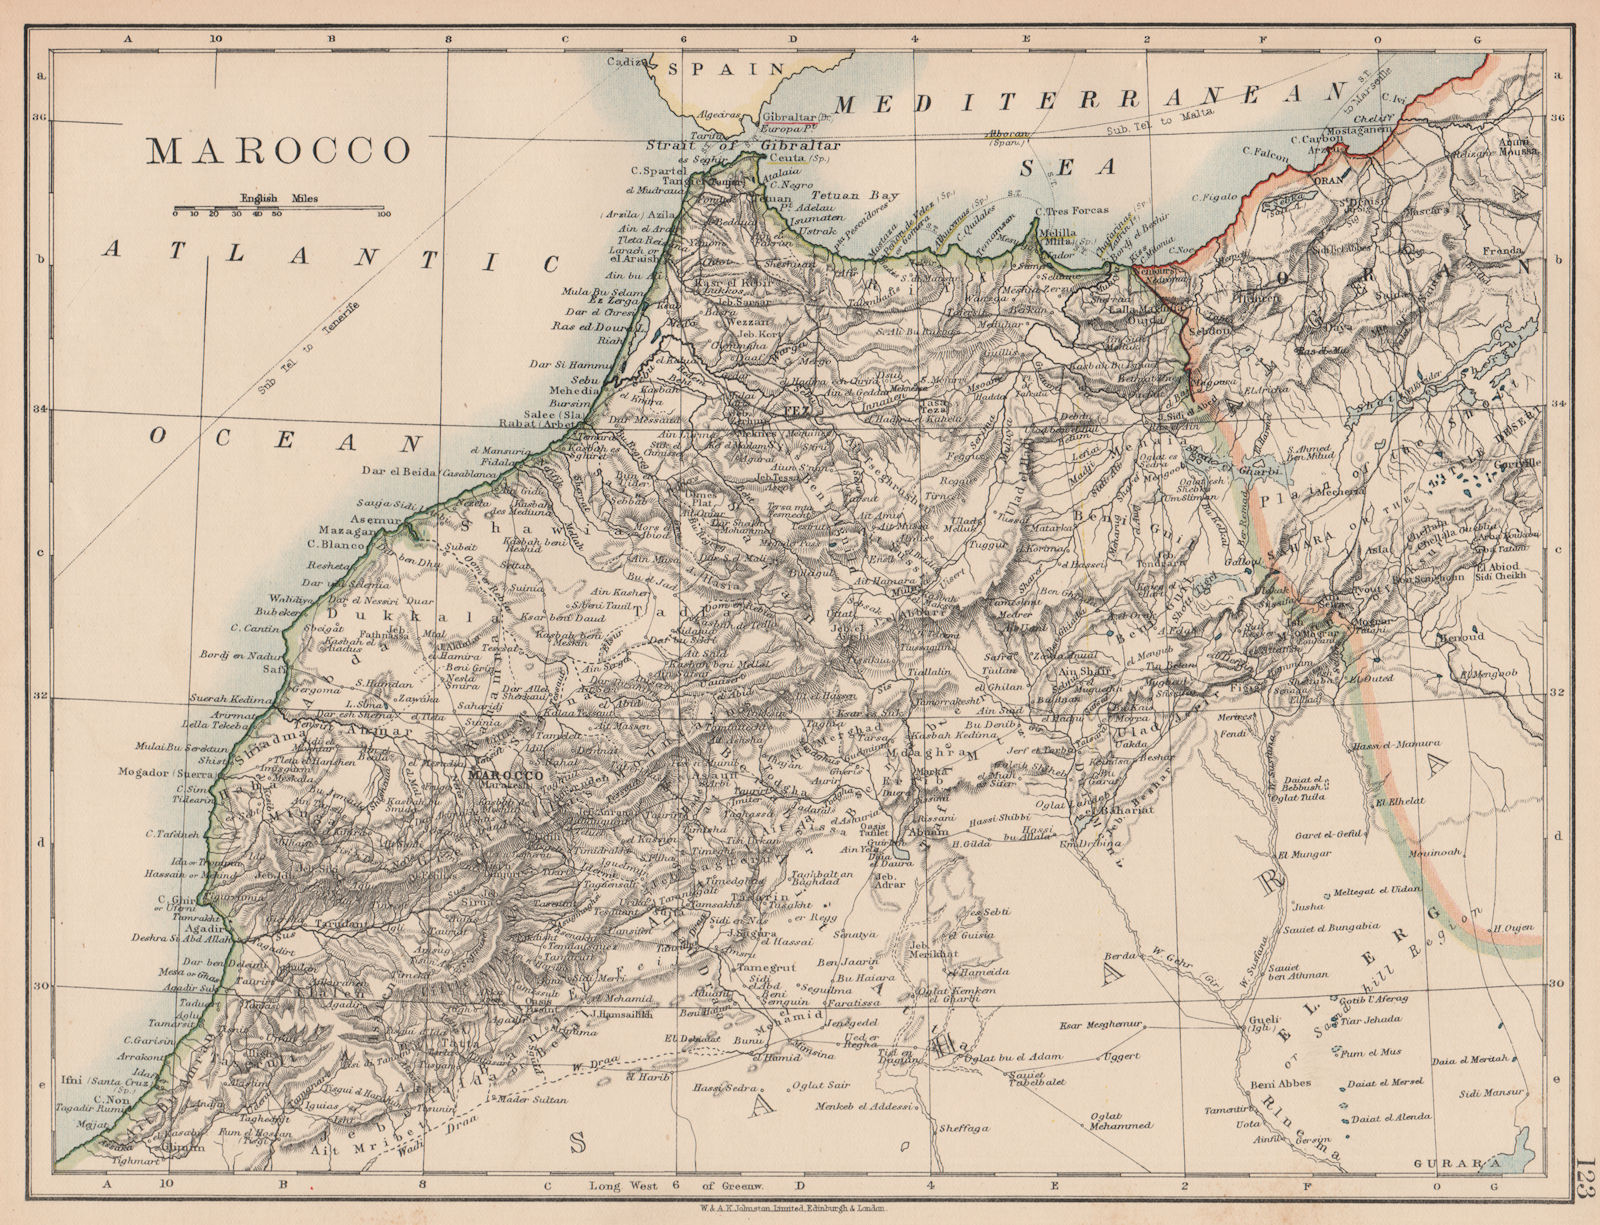 MOROCCO. Showing Atlas Mountains rivers towns. Marrakech. JOHNSTON 1906 map